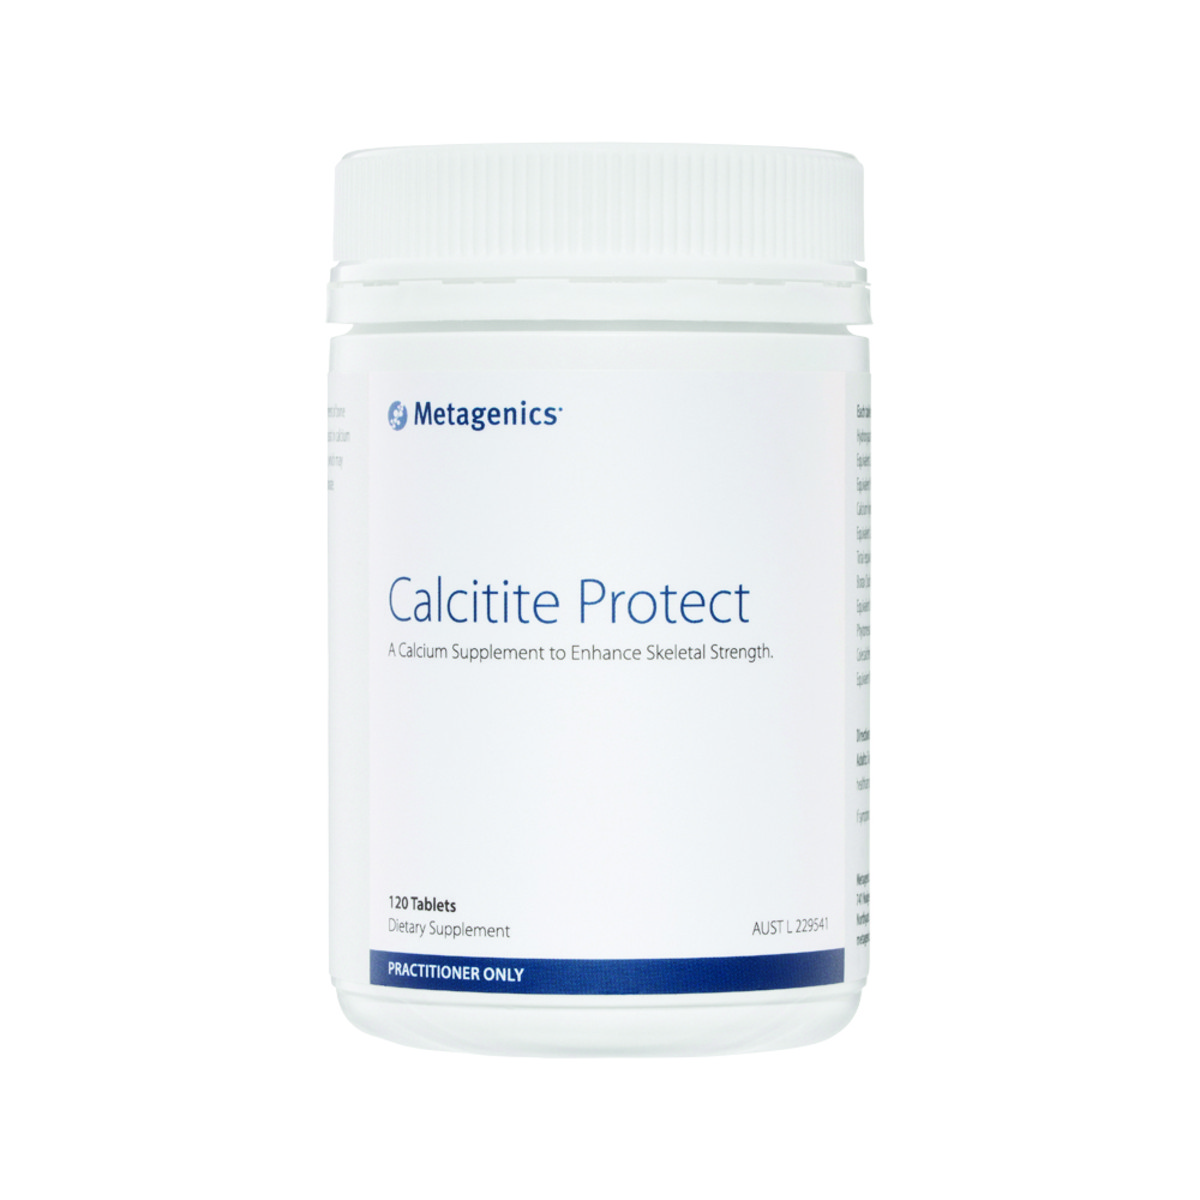 METAGENICS - Calcitite Protect